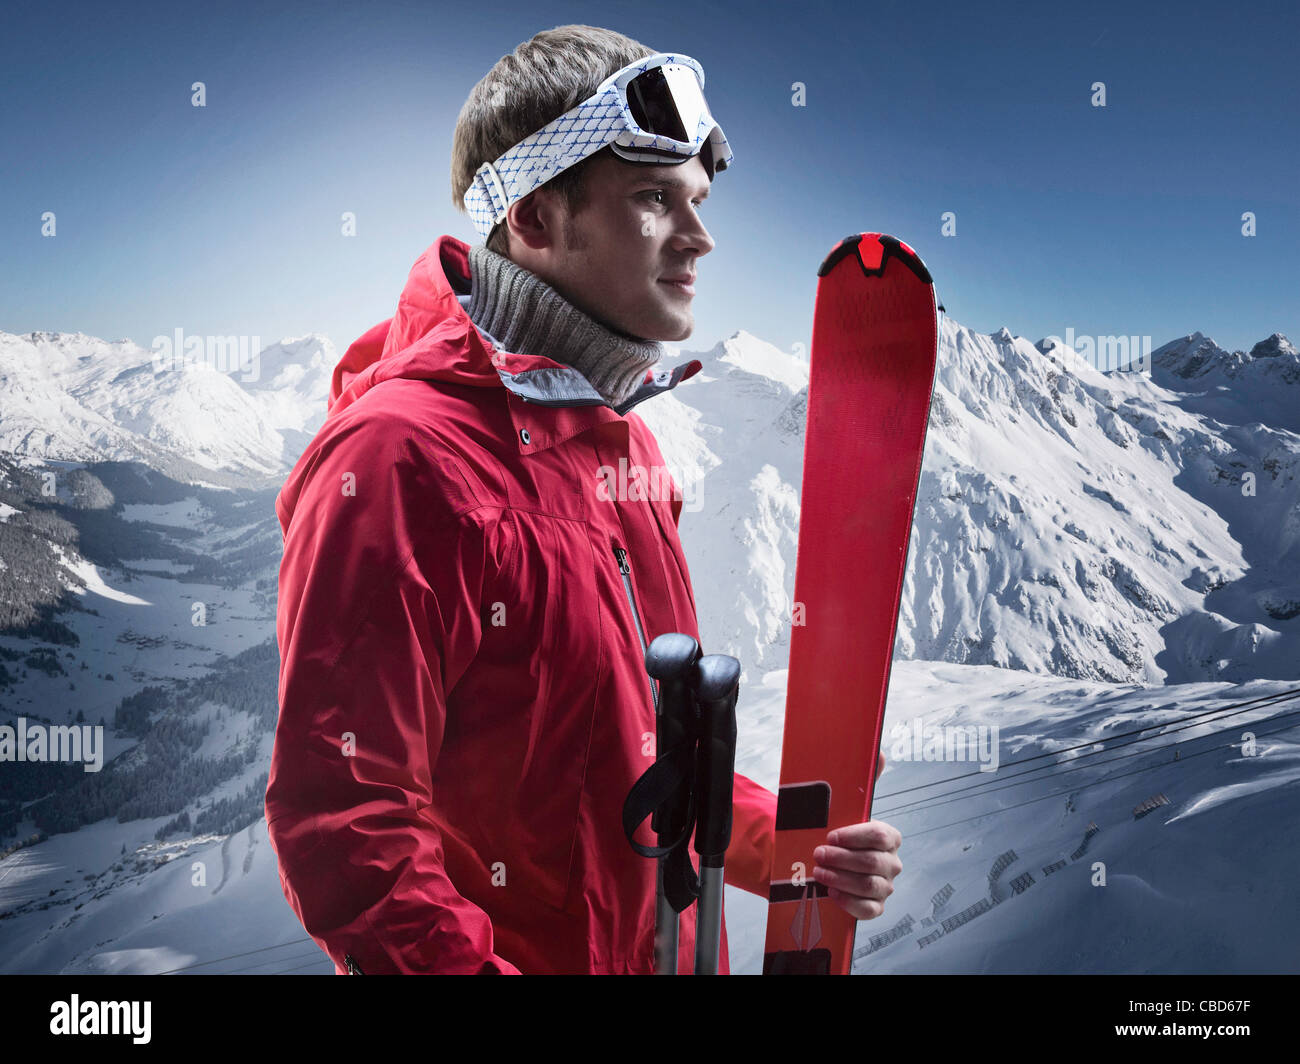 Man carrying skis on snowy mountain Stock Photo